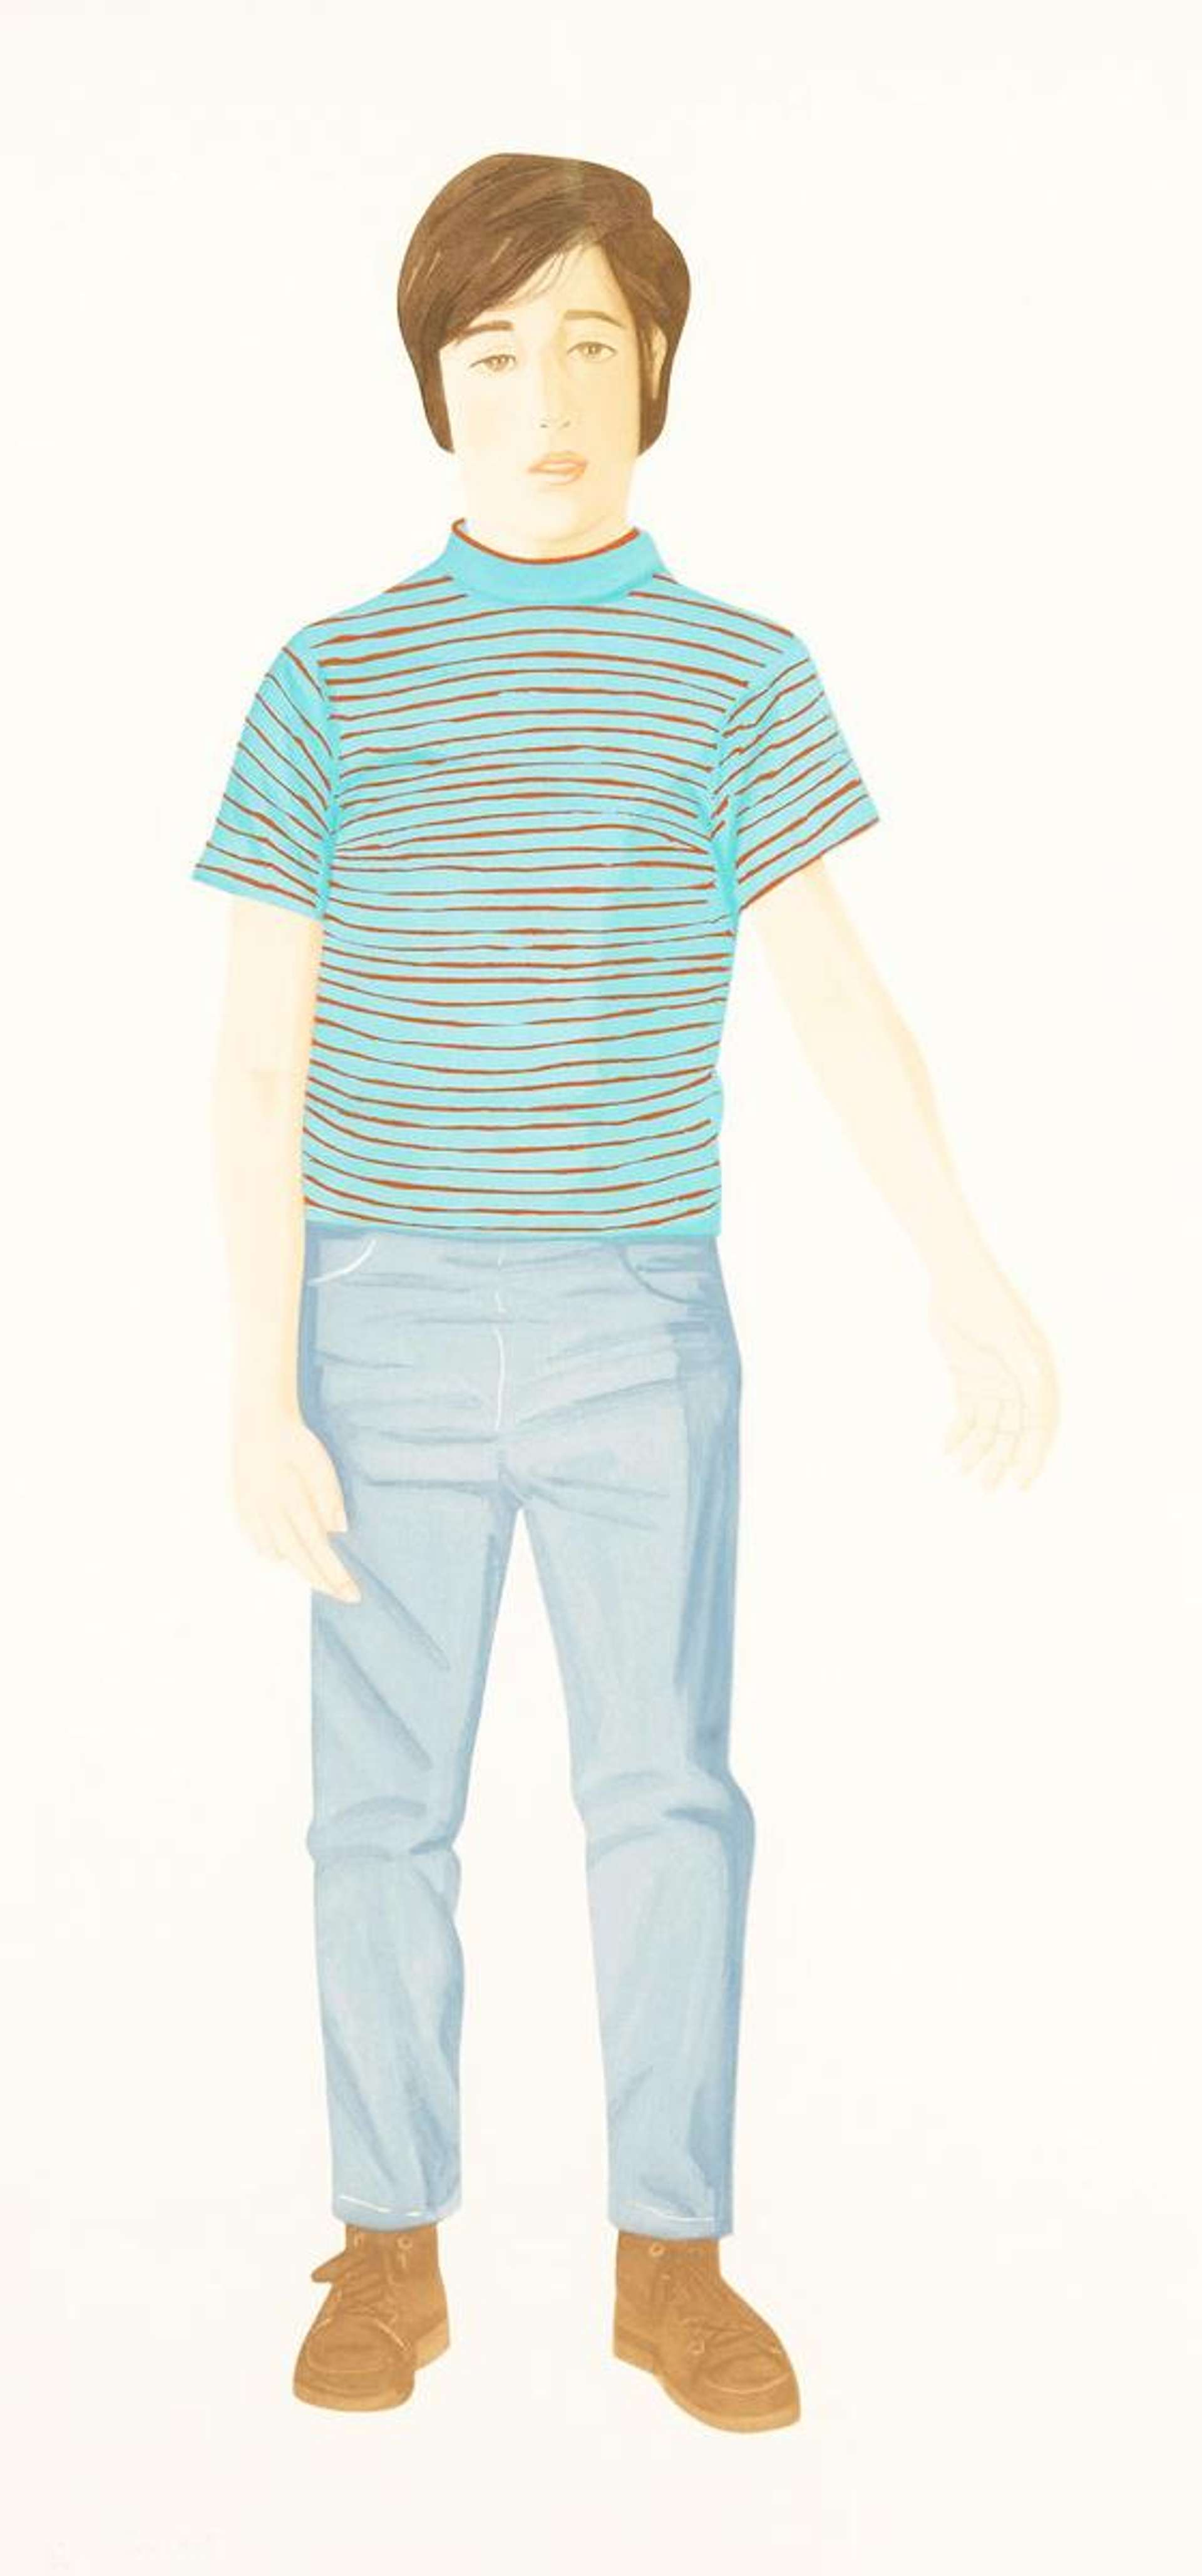 Alex Katz: The Striped Shirt - Signed Print